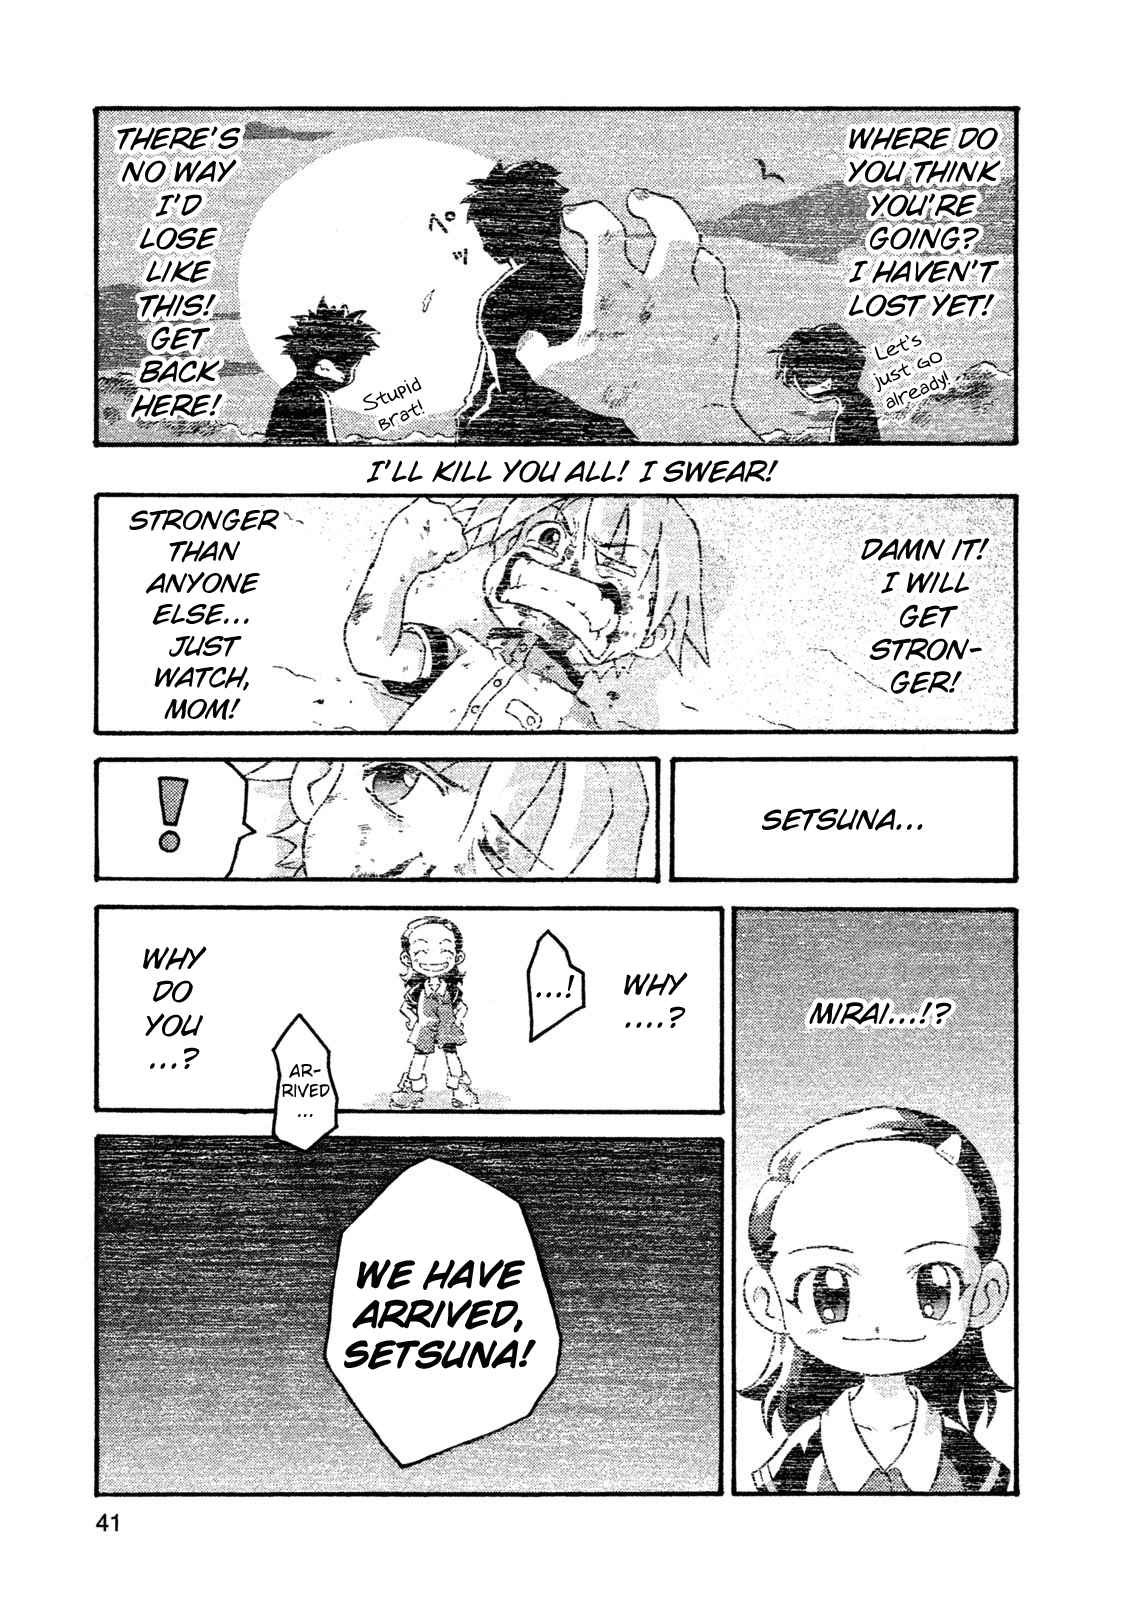 Shin Megami Tensei Devil Children Vol. 1 Ch. 2 Excessive Expectations